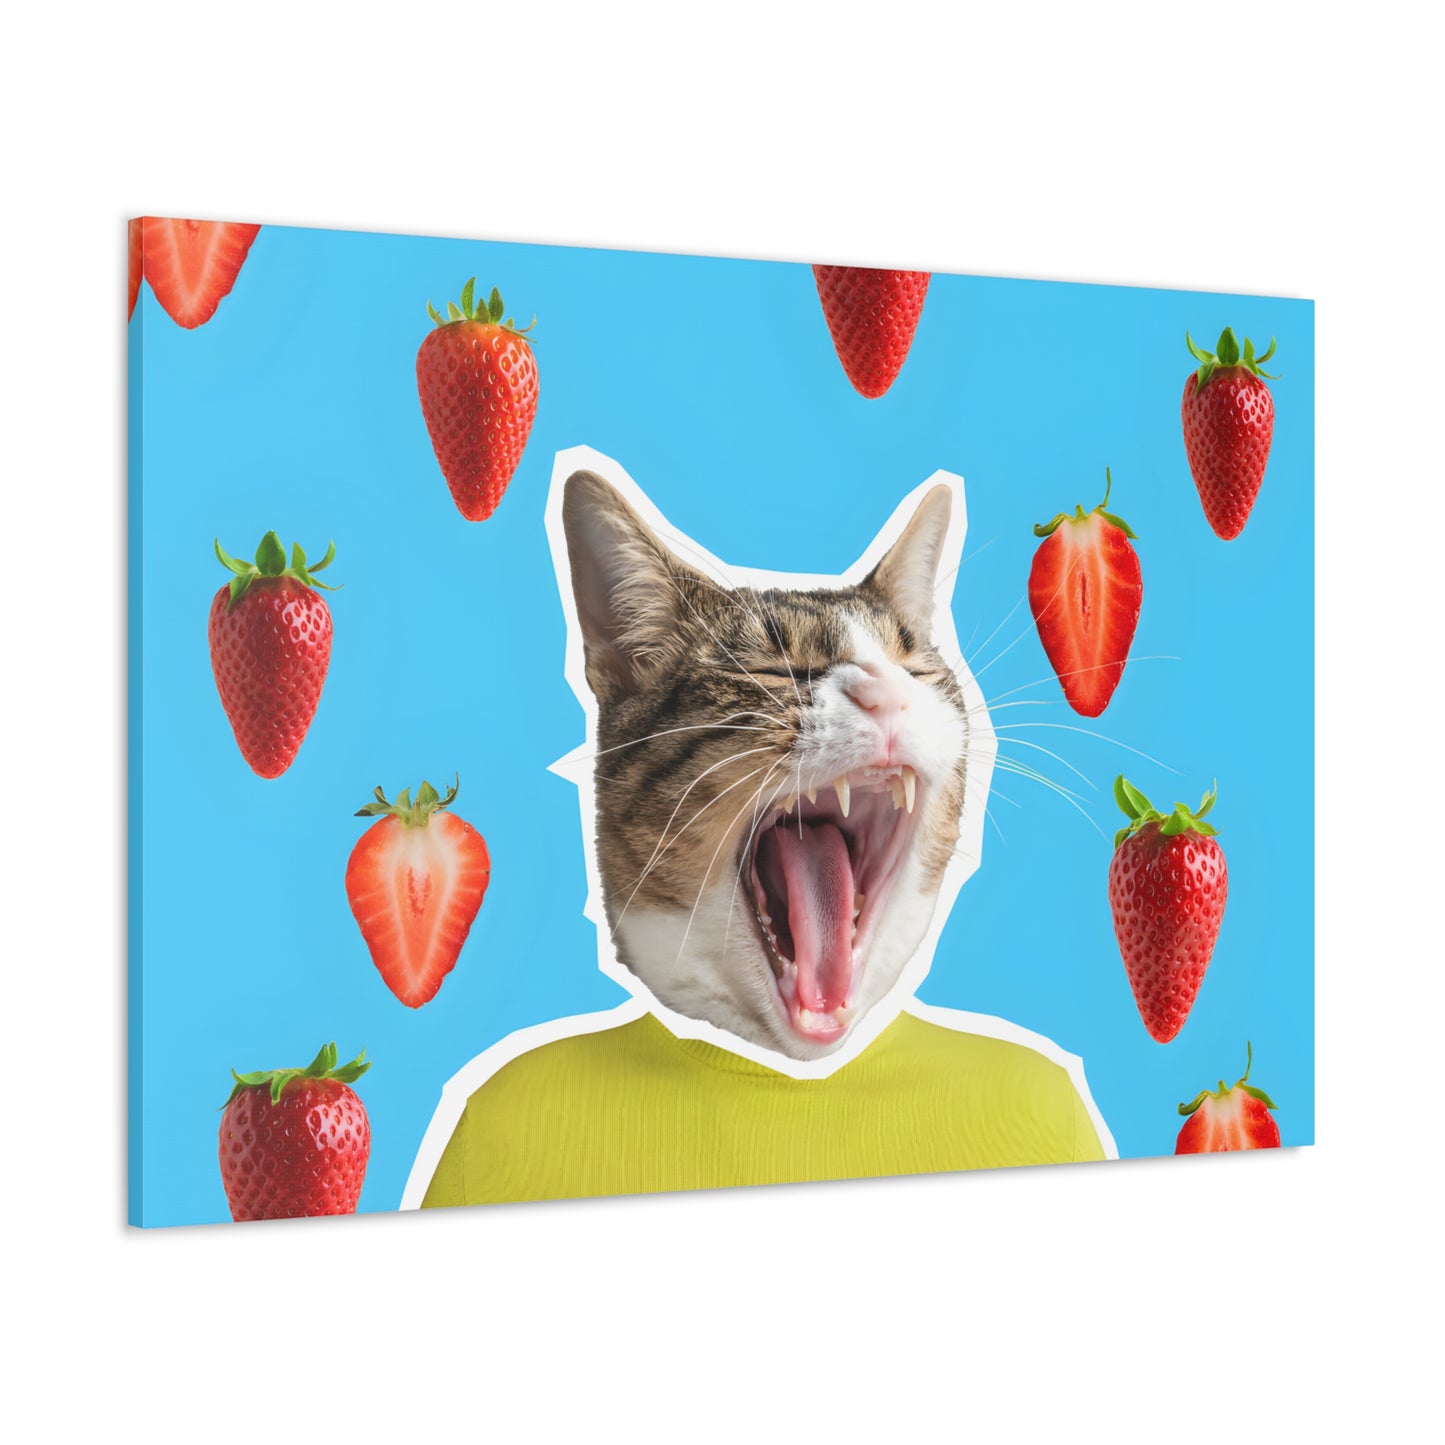 Laser Cat Strawberry Edition